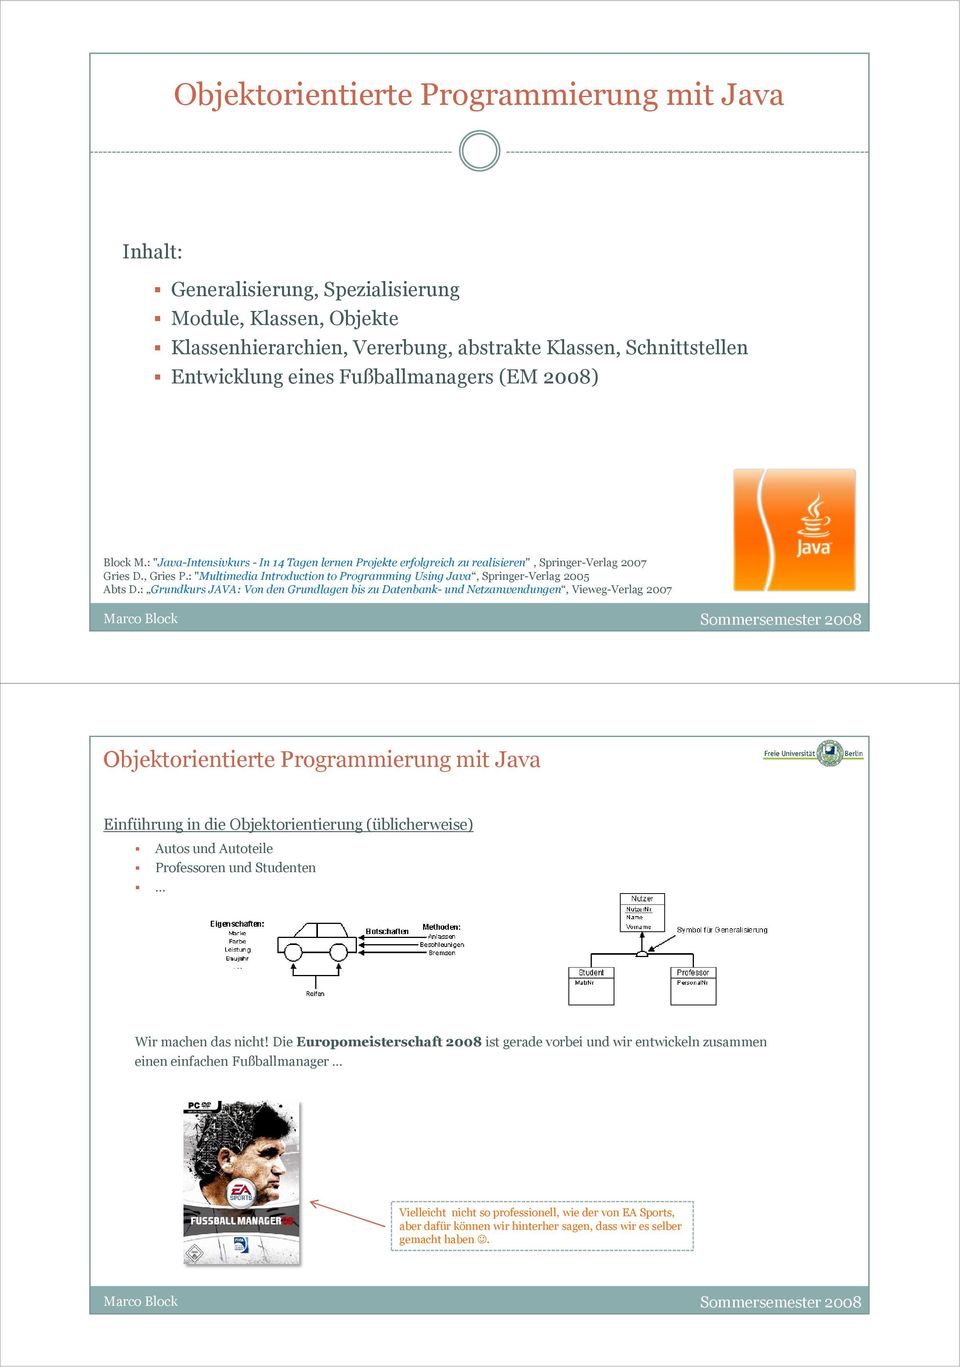 : "Multimedia Introduction to Programming Using Java, Springer-Verlag 2005 Abts D.